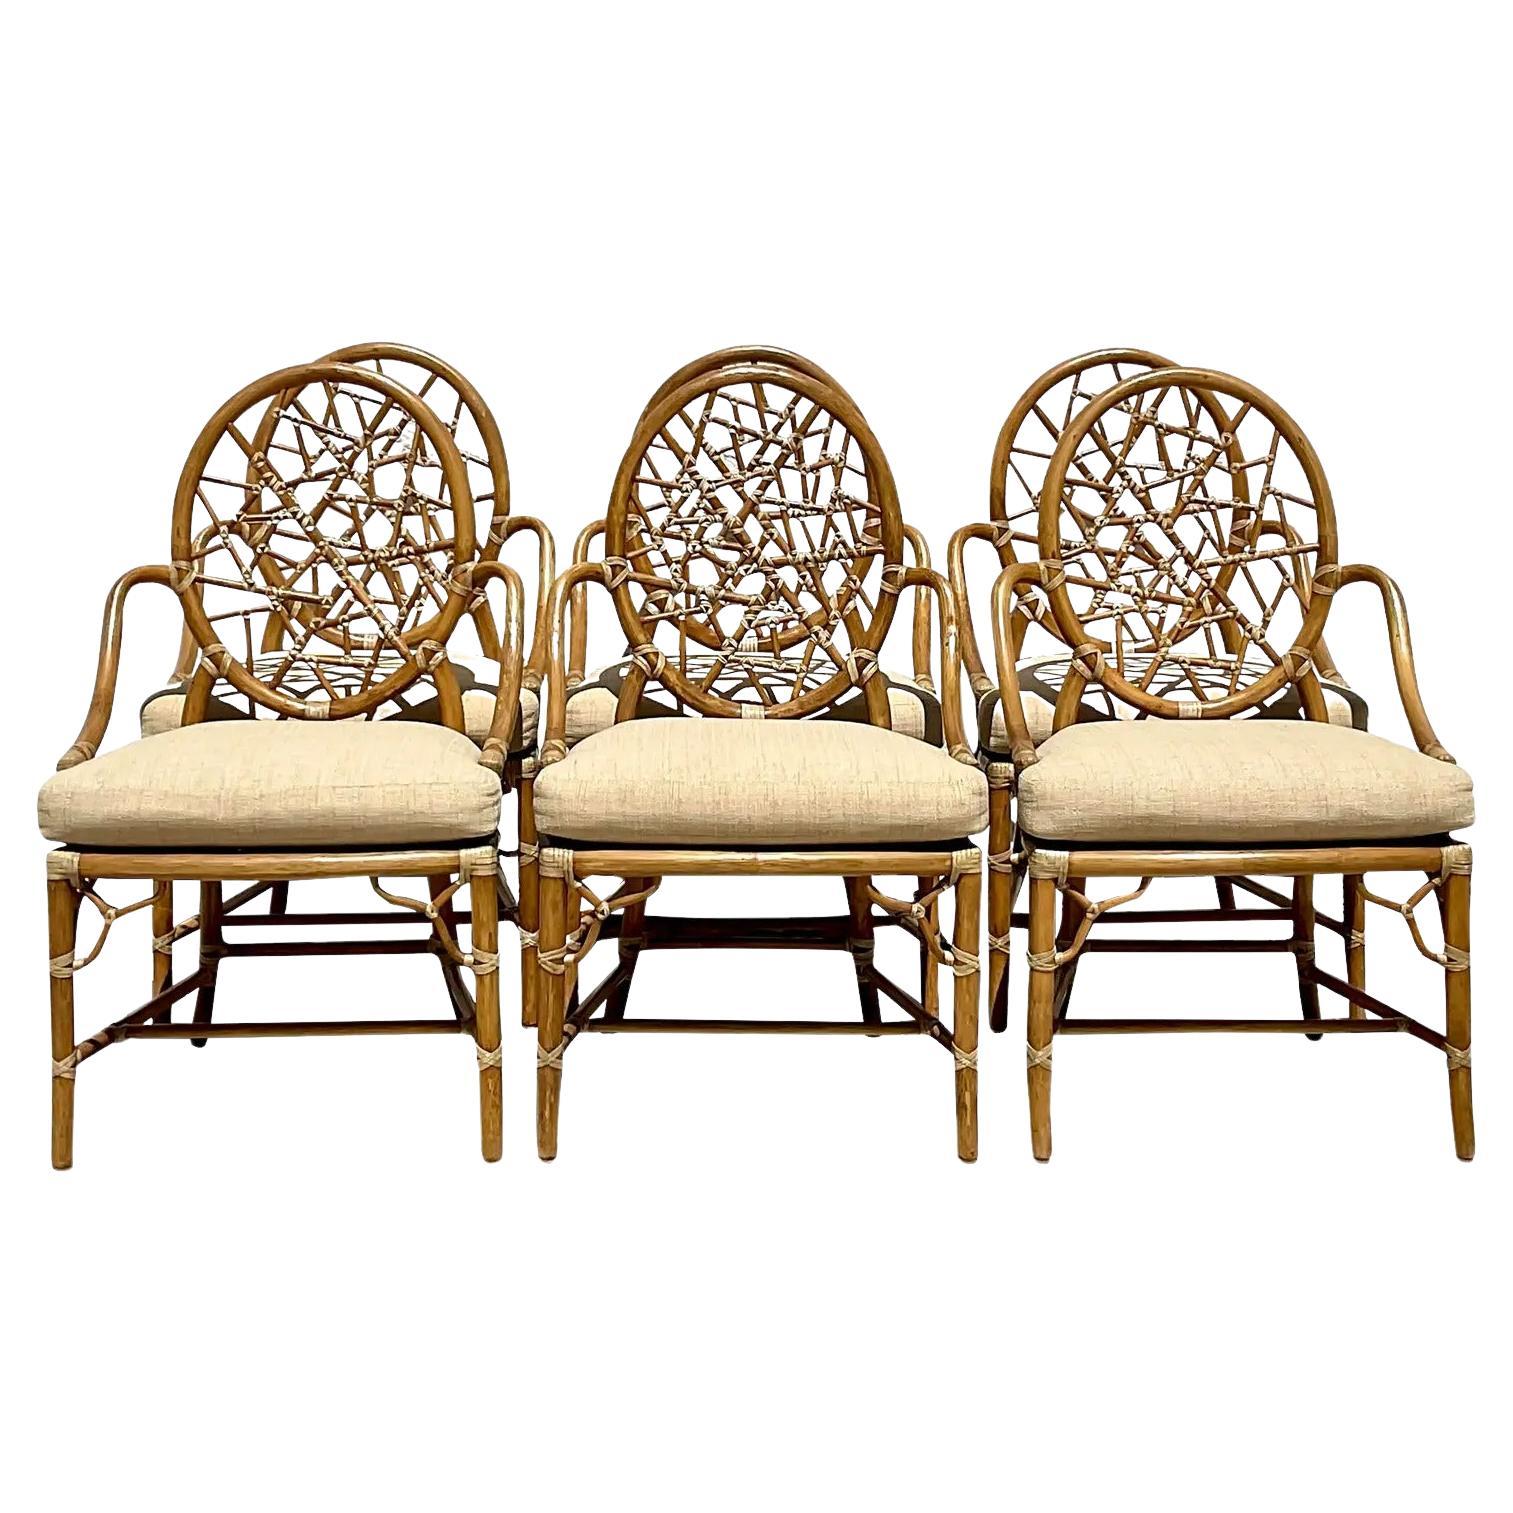 Vintage Coastal McGuire “Cracked Ice” Rattan Dining Chairs - Set of 6